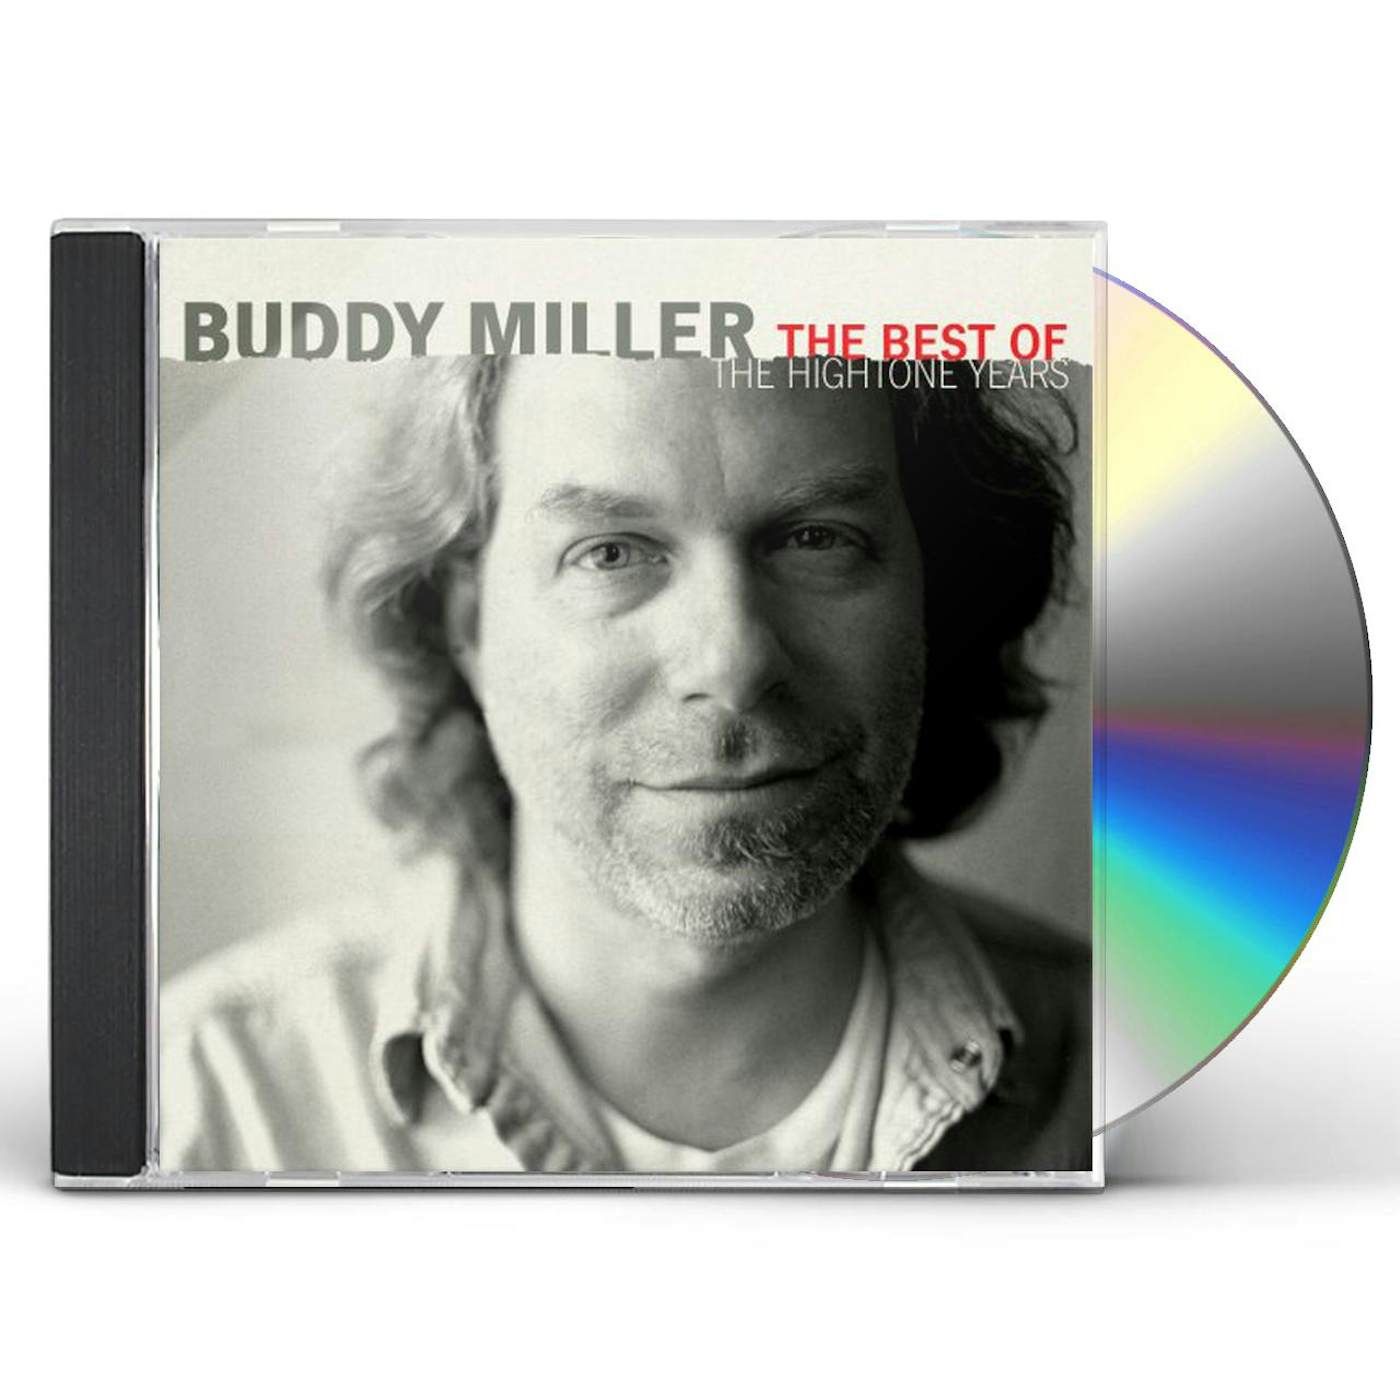 Buddy Miller BEST OF THE HIGHTONE YEARS CD